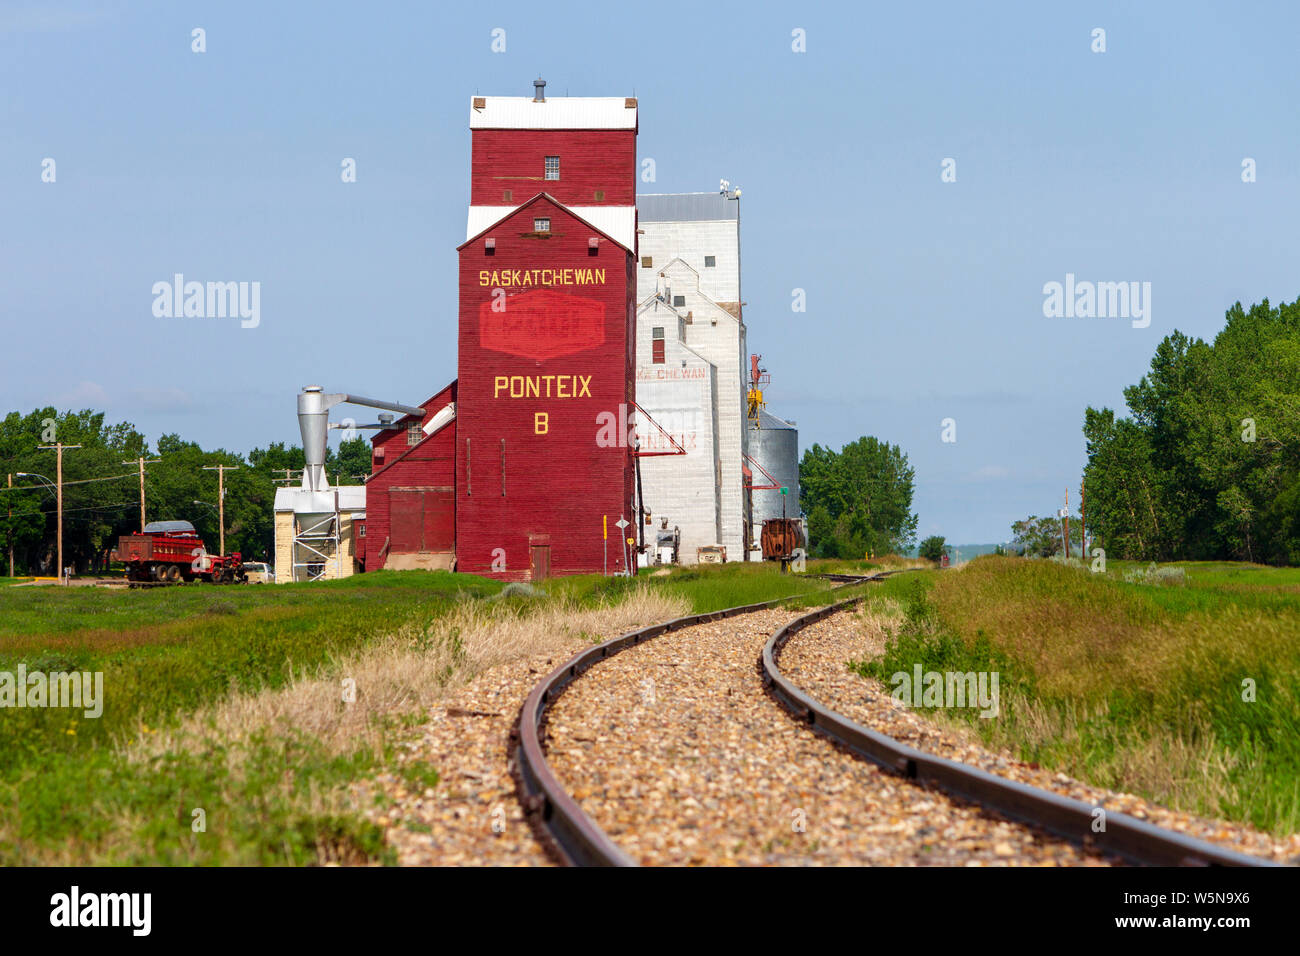 Pontiex, Saskatchewan, Canada - July 8, 2019: Landscape scenic view of old wooden grain elevator in the Canadian prairie town of Pontiex, Saskatchewan Stock Photo